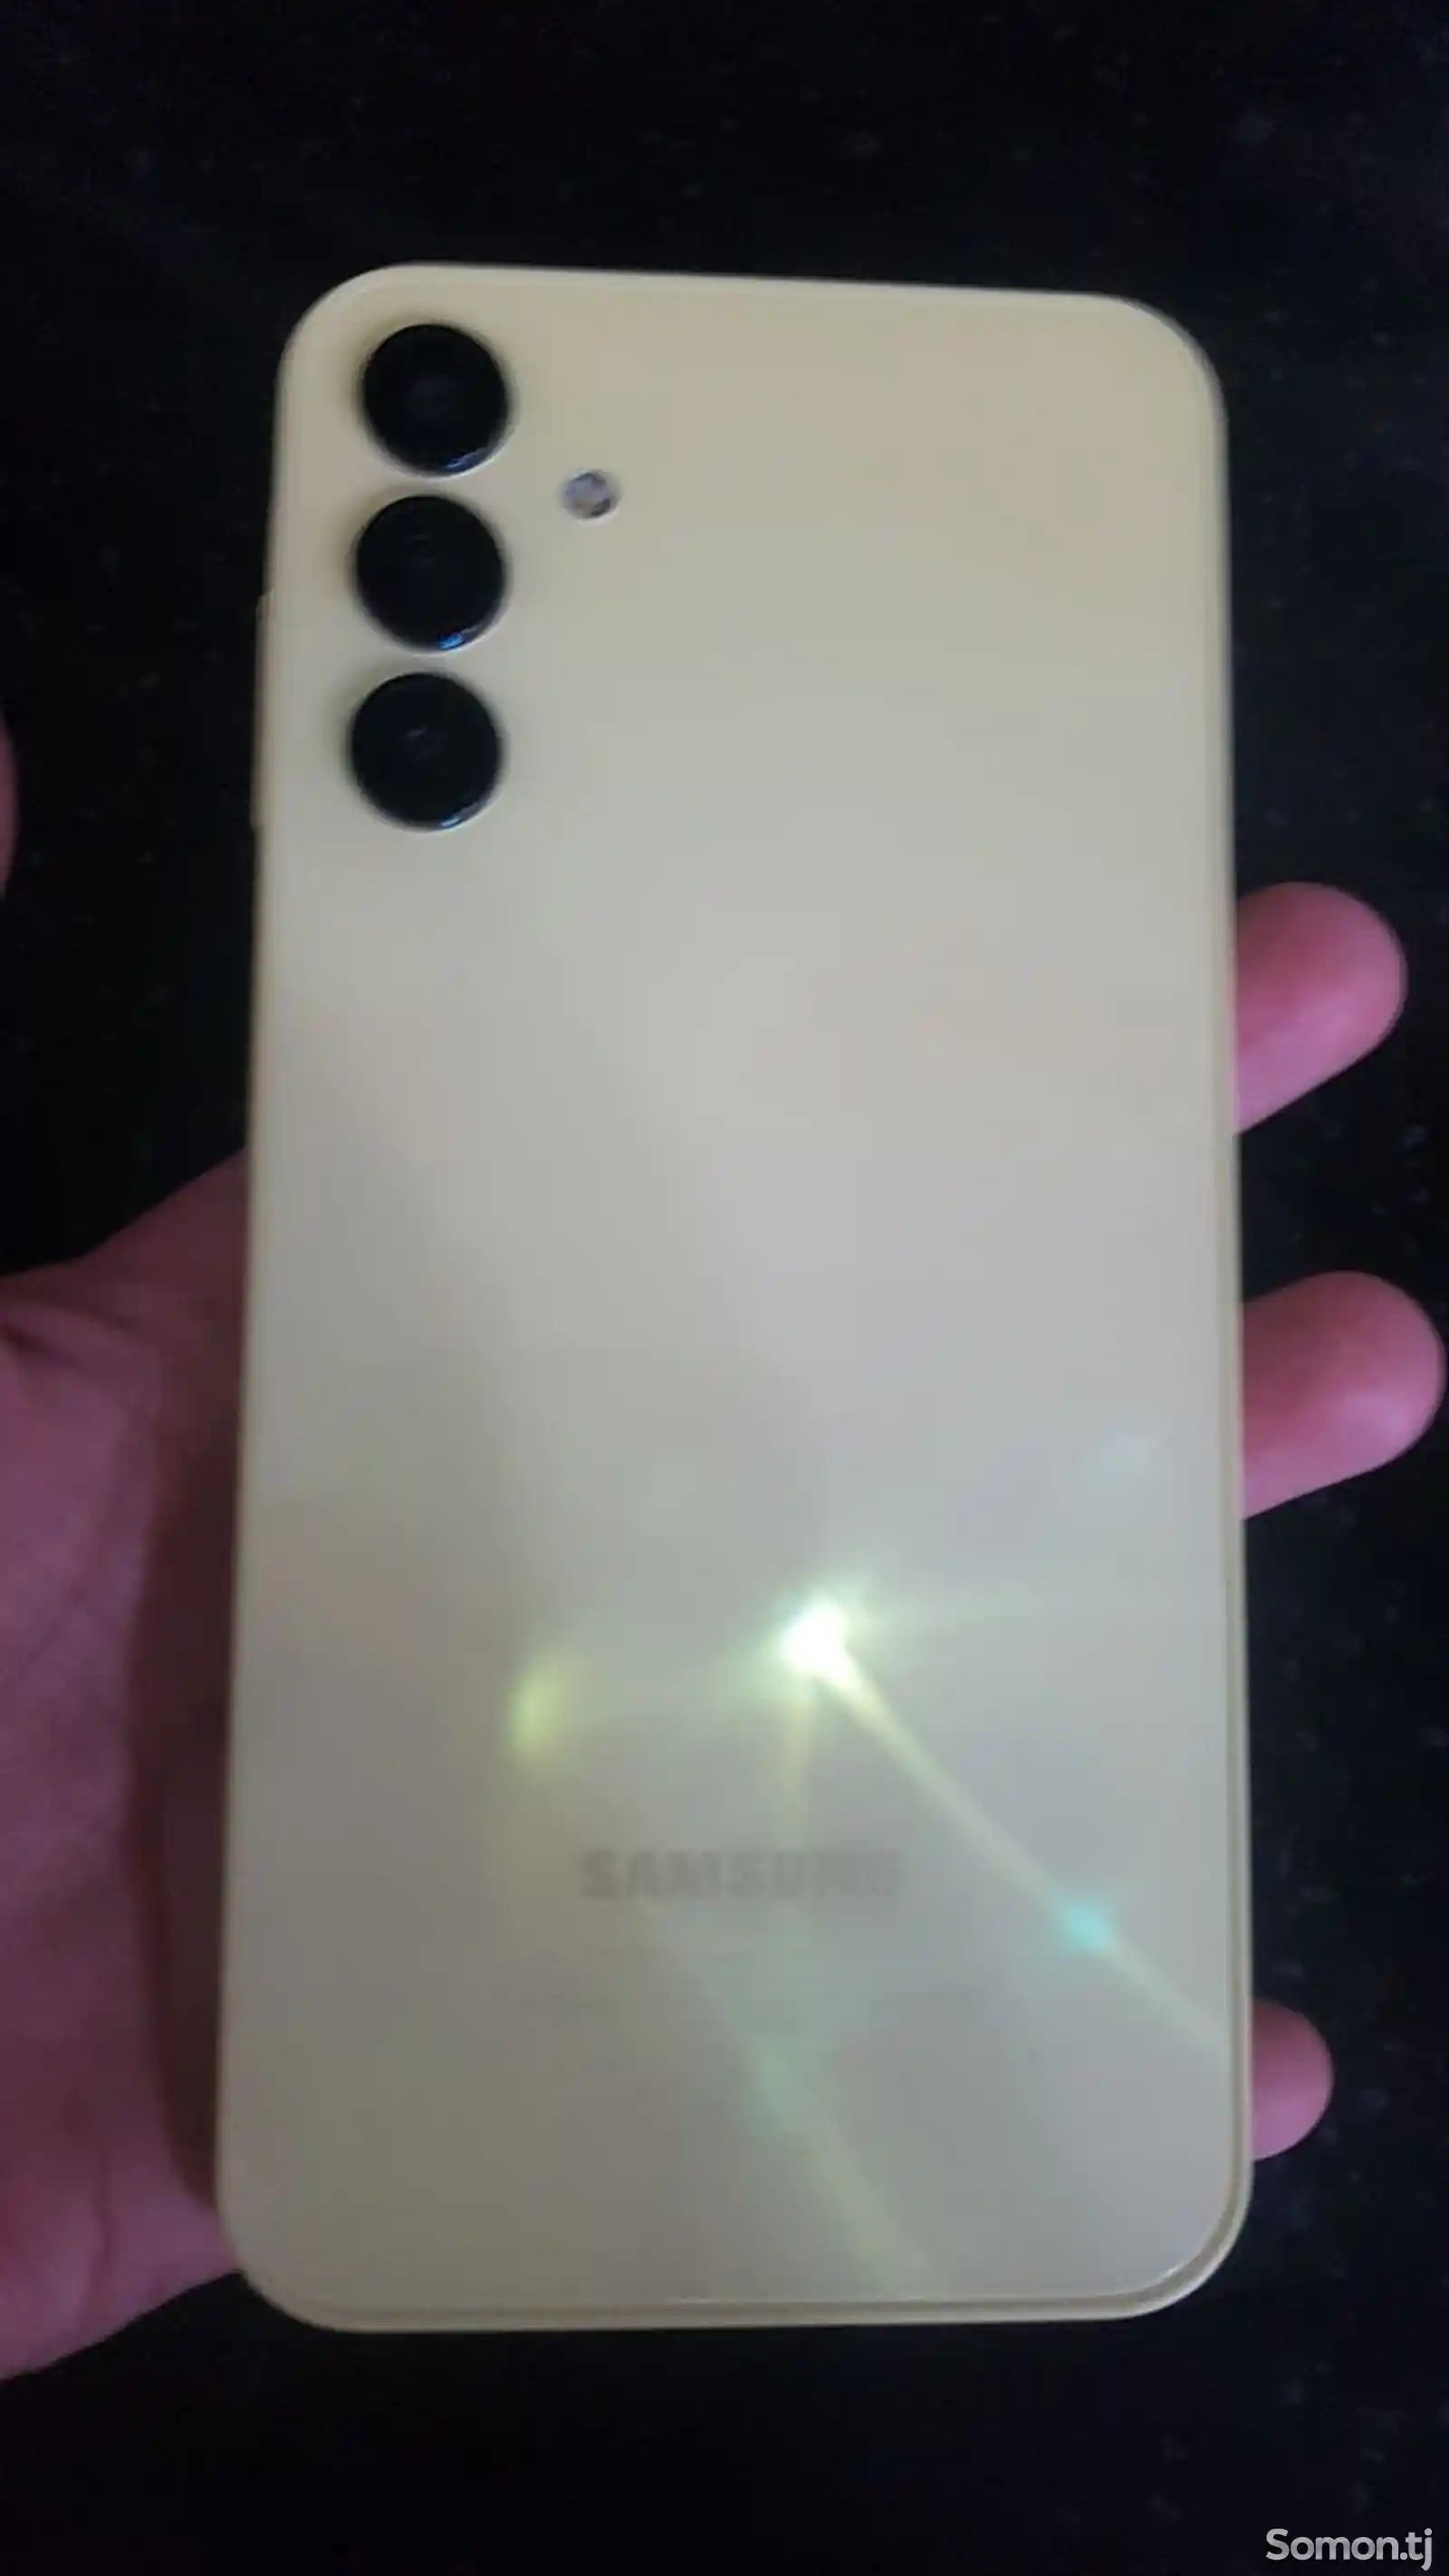 Samsung Galaxy А15-2